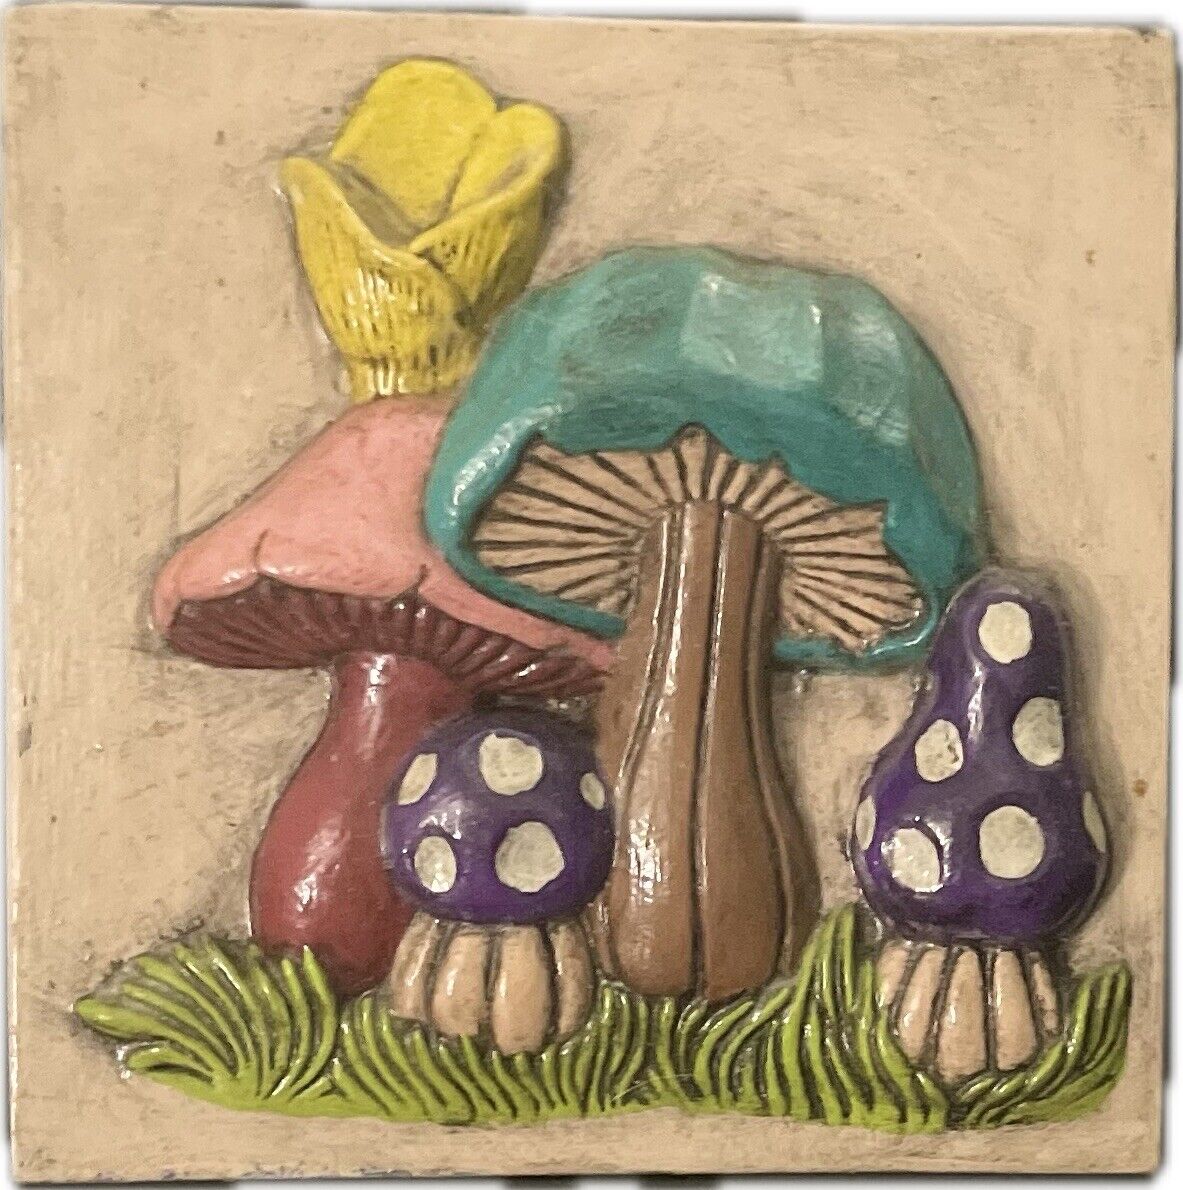 Vintage Mushroom Ceramic Wall Hanging Tile Retro Mycology Mushrooms Decor Fungus